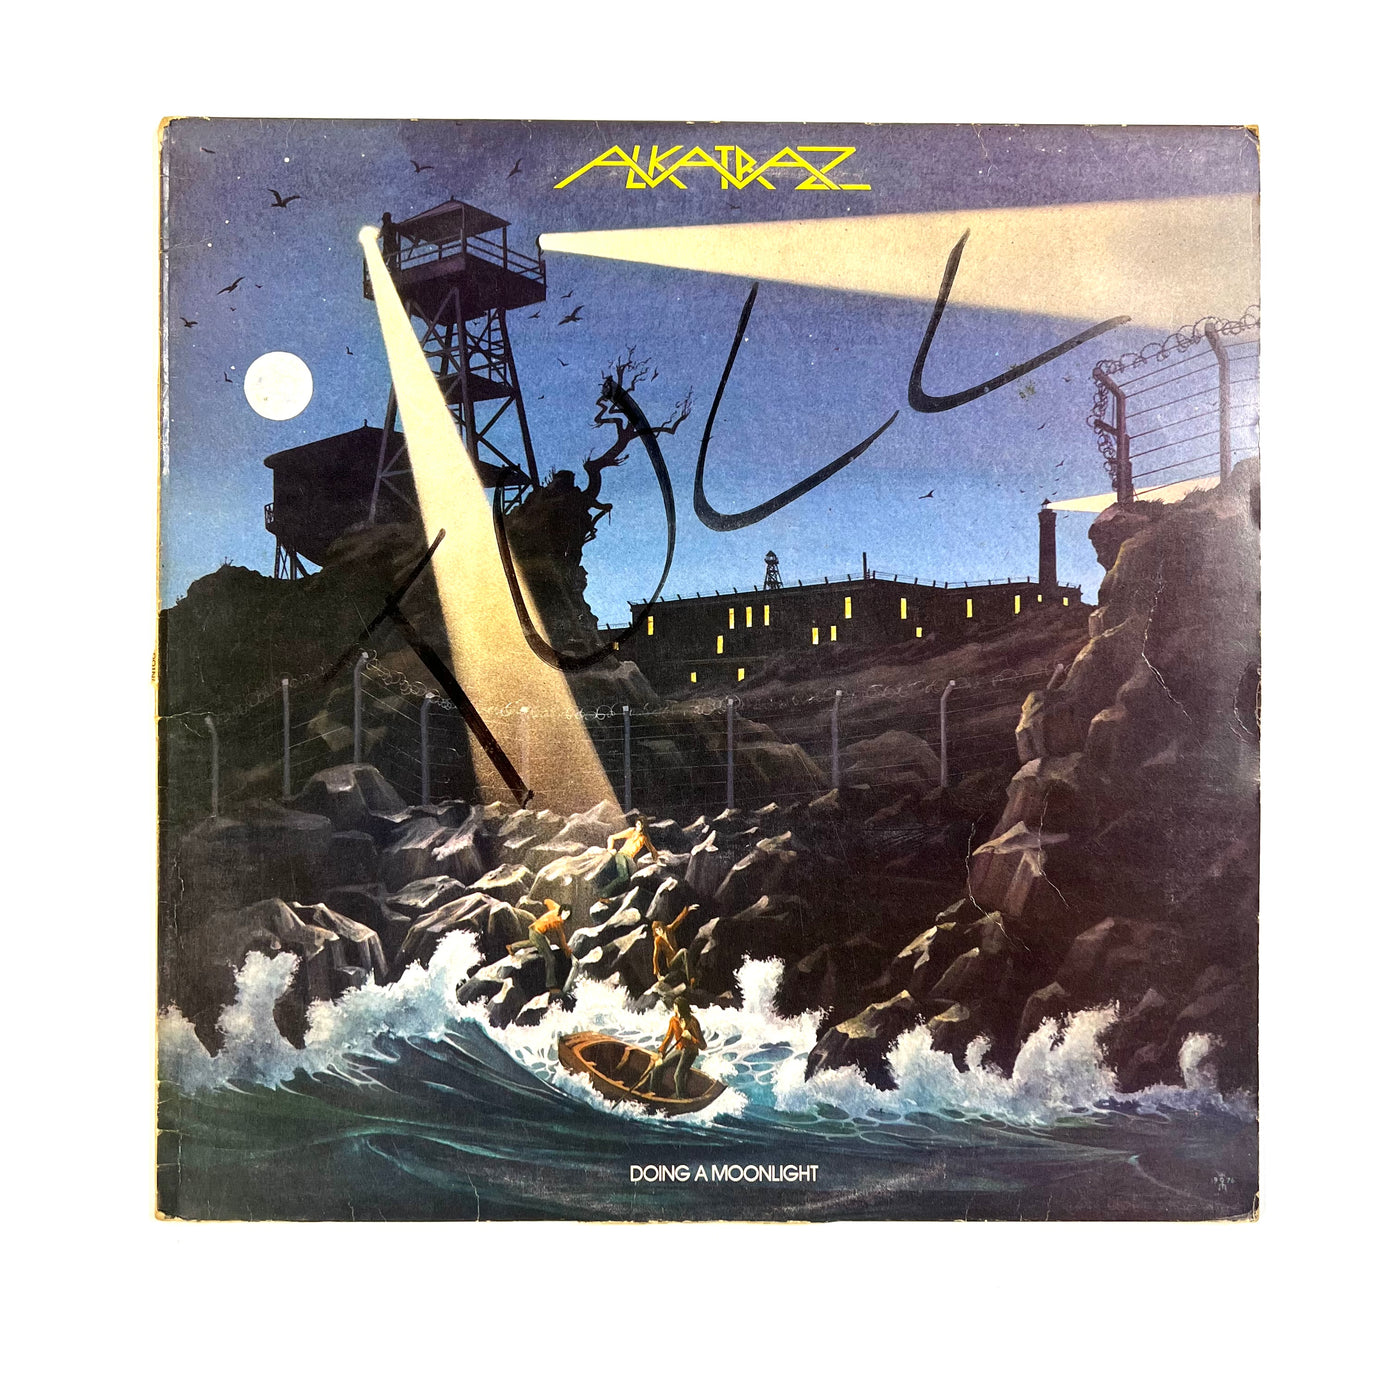 Alkatraz (5) - Doing A Moonlight